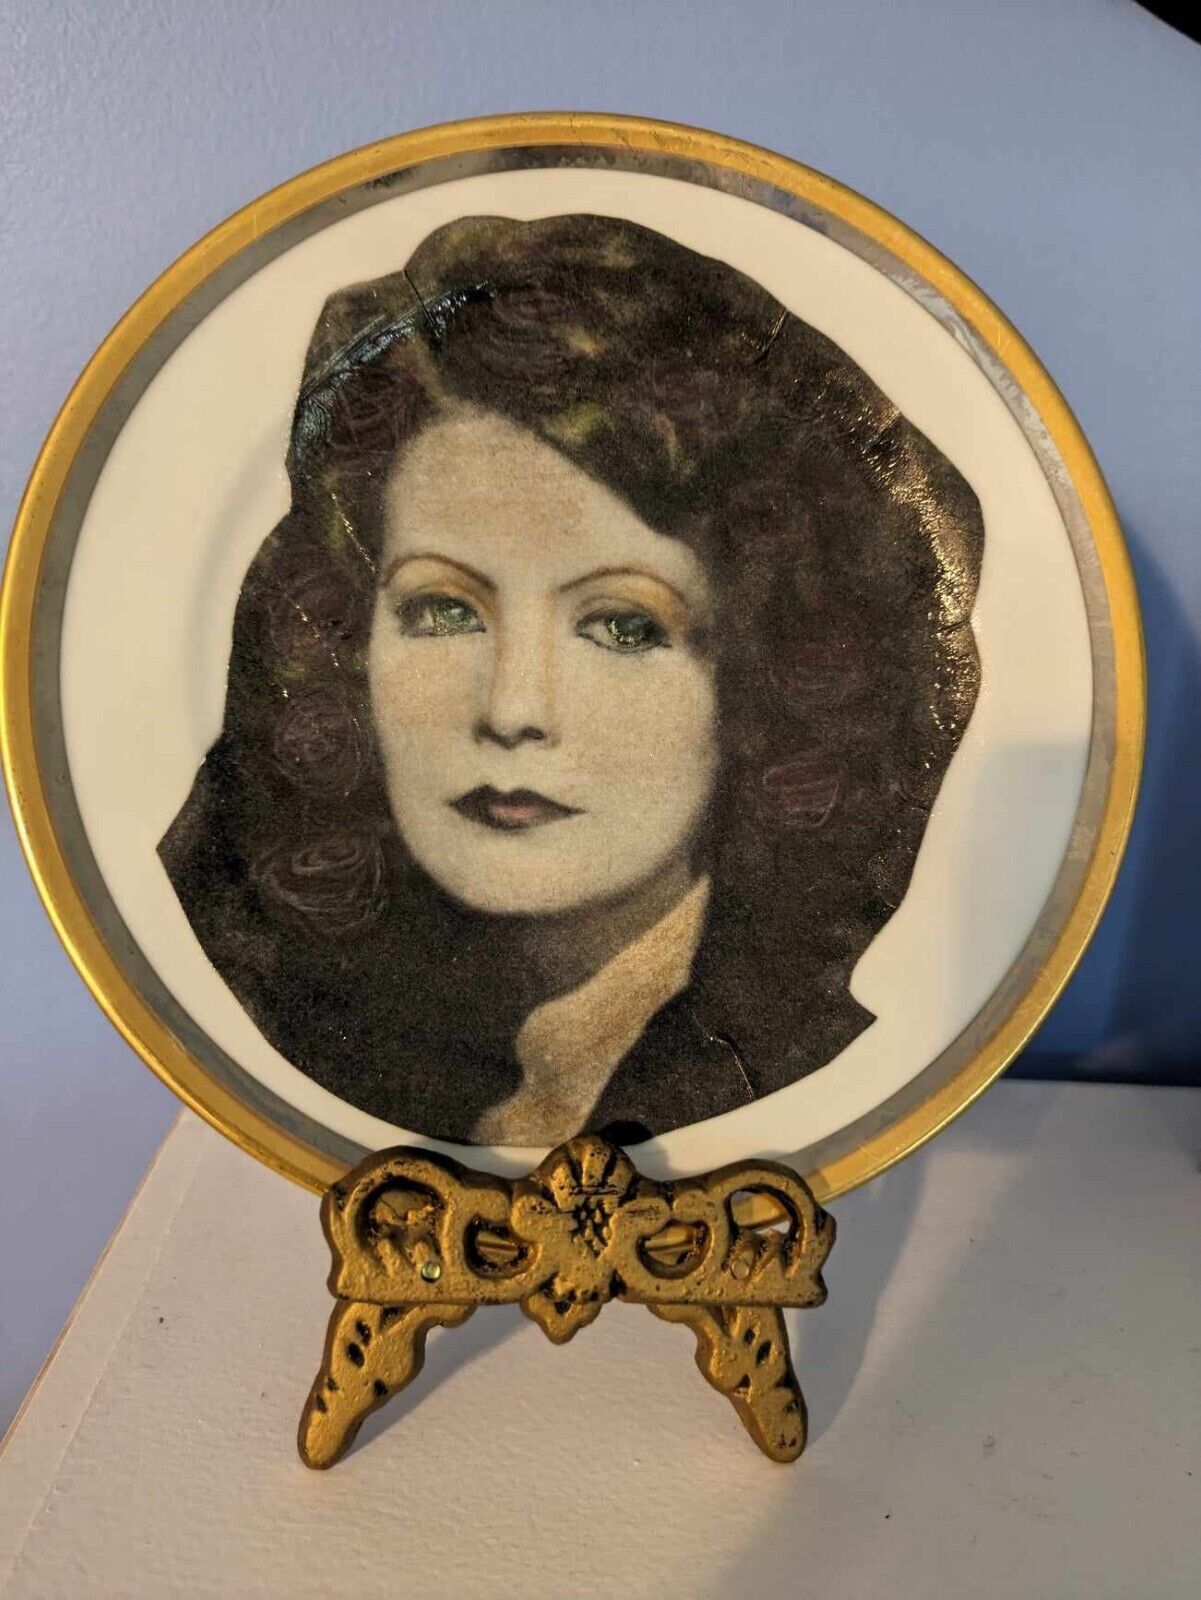 Greta Garbo decoupaged enhanced on plate